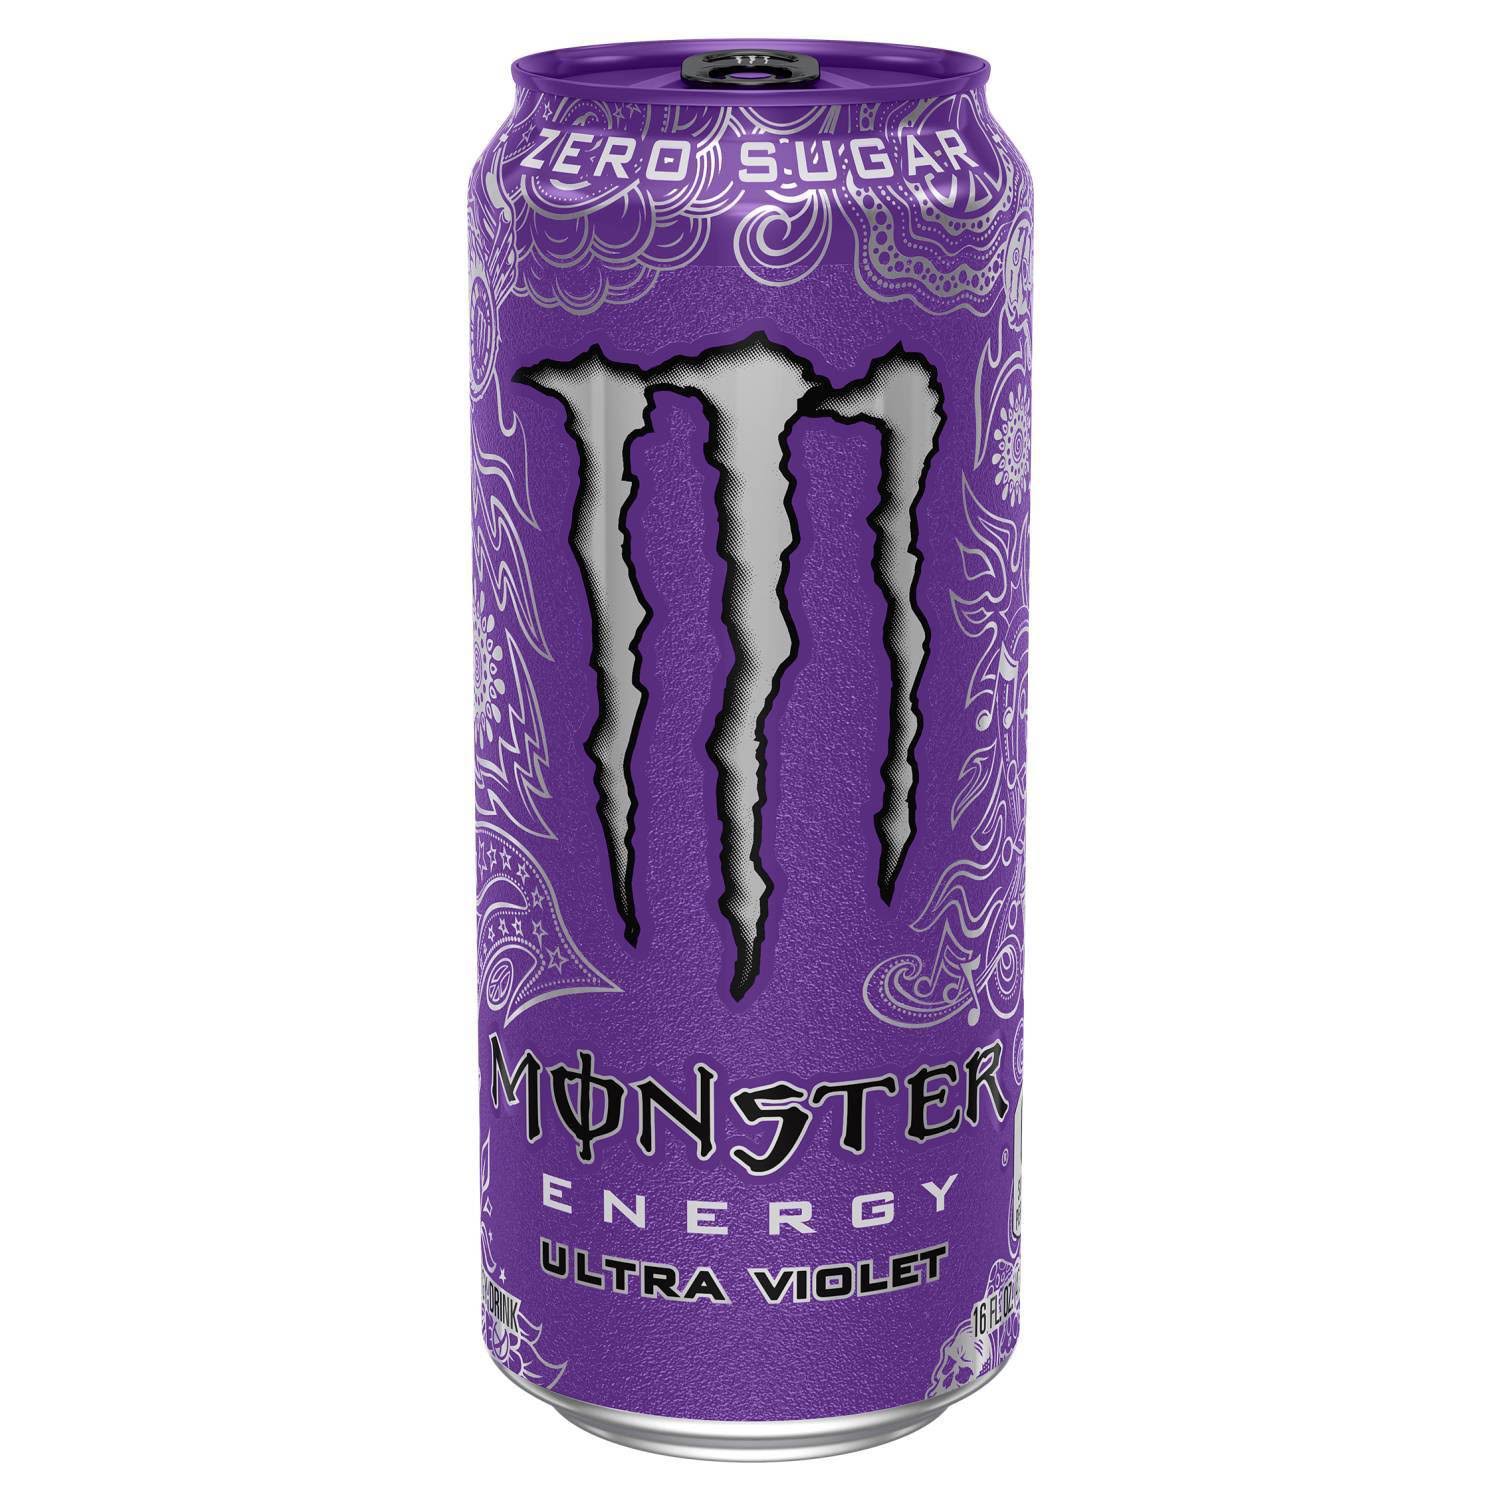 Monster Energy Energy Drink, Ultra Violet - 16 oz